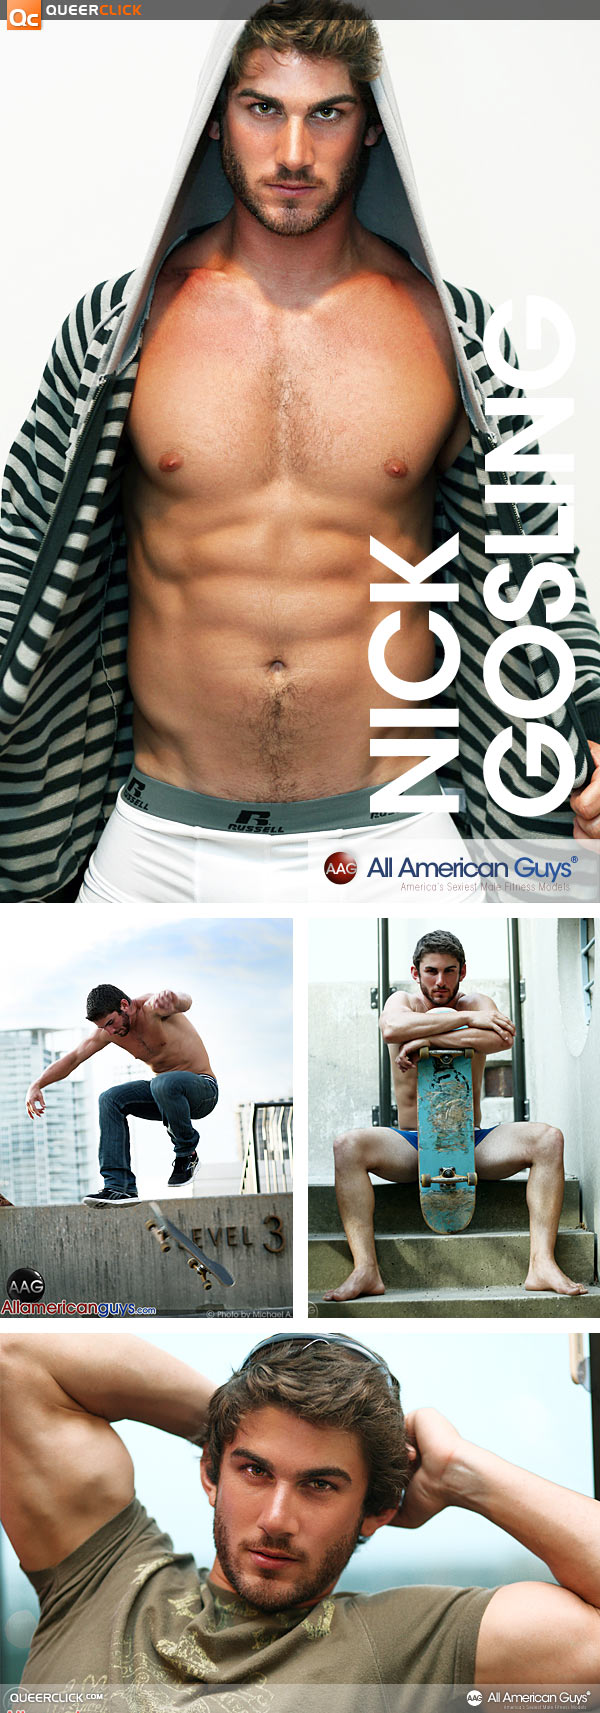 All American Guys: Nick Gosling